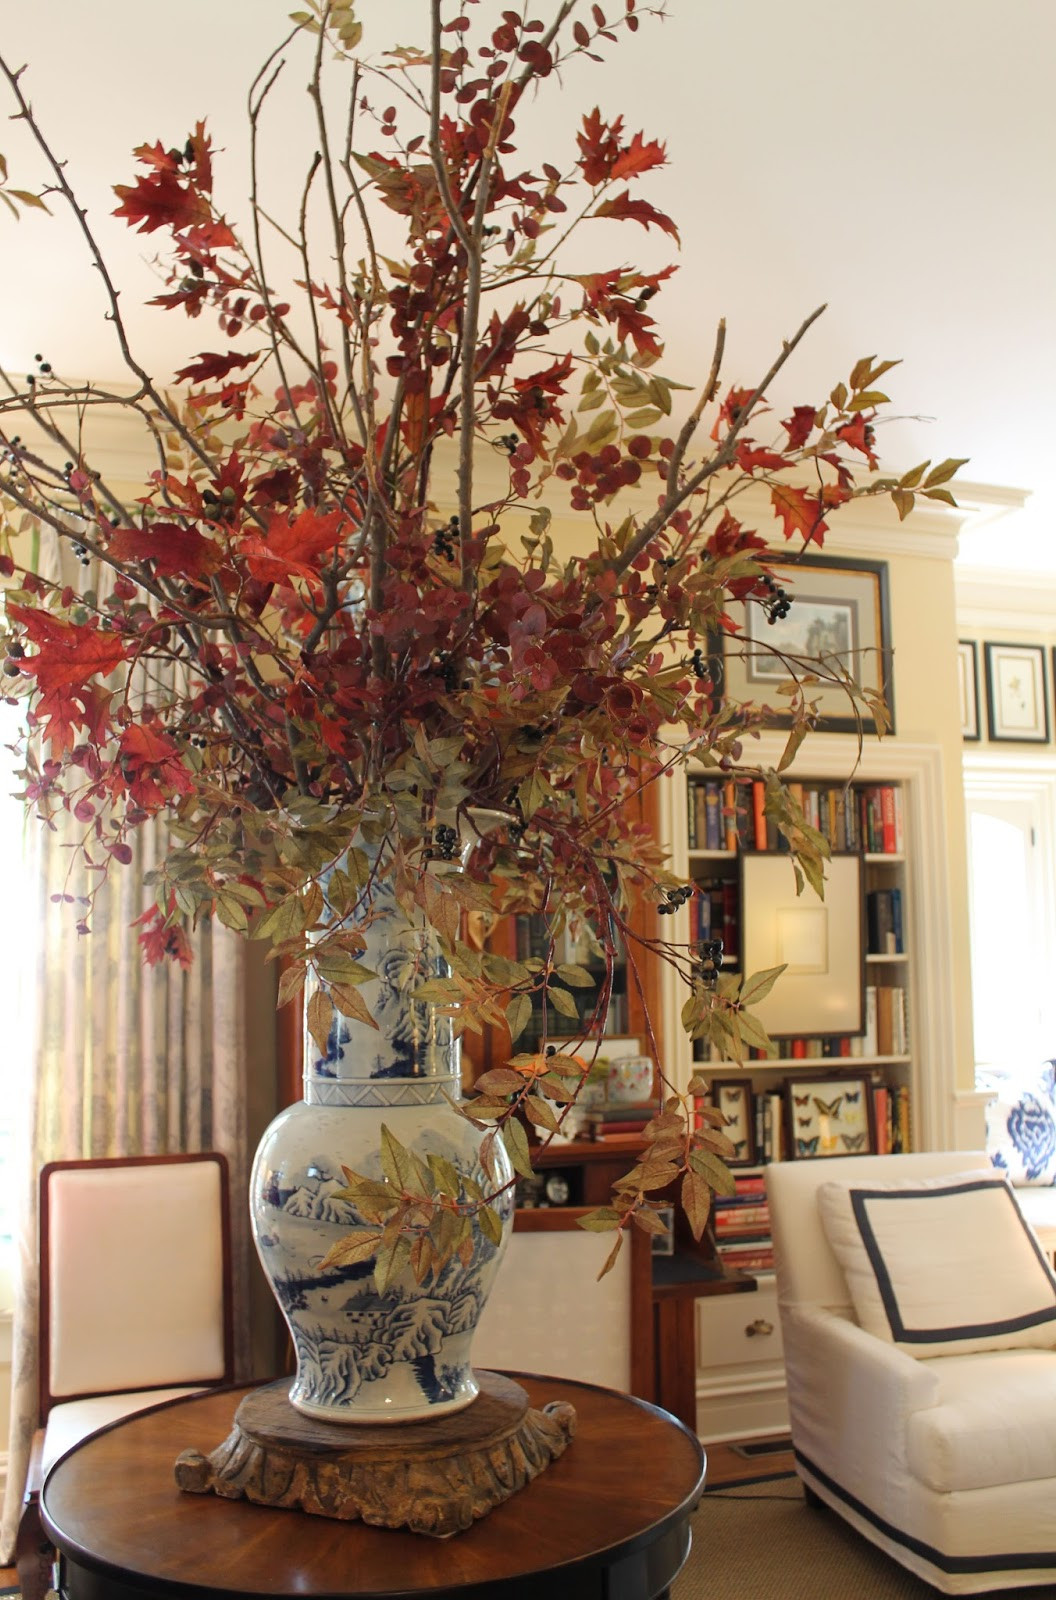 Decorative Vases For Living Room
 Vases for Living Room Decor